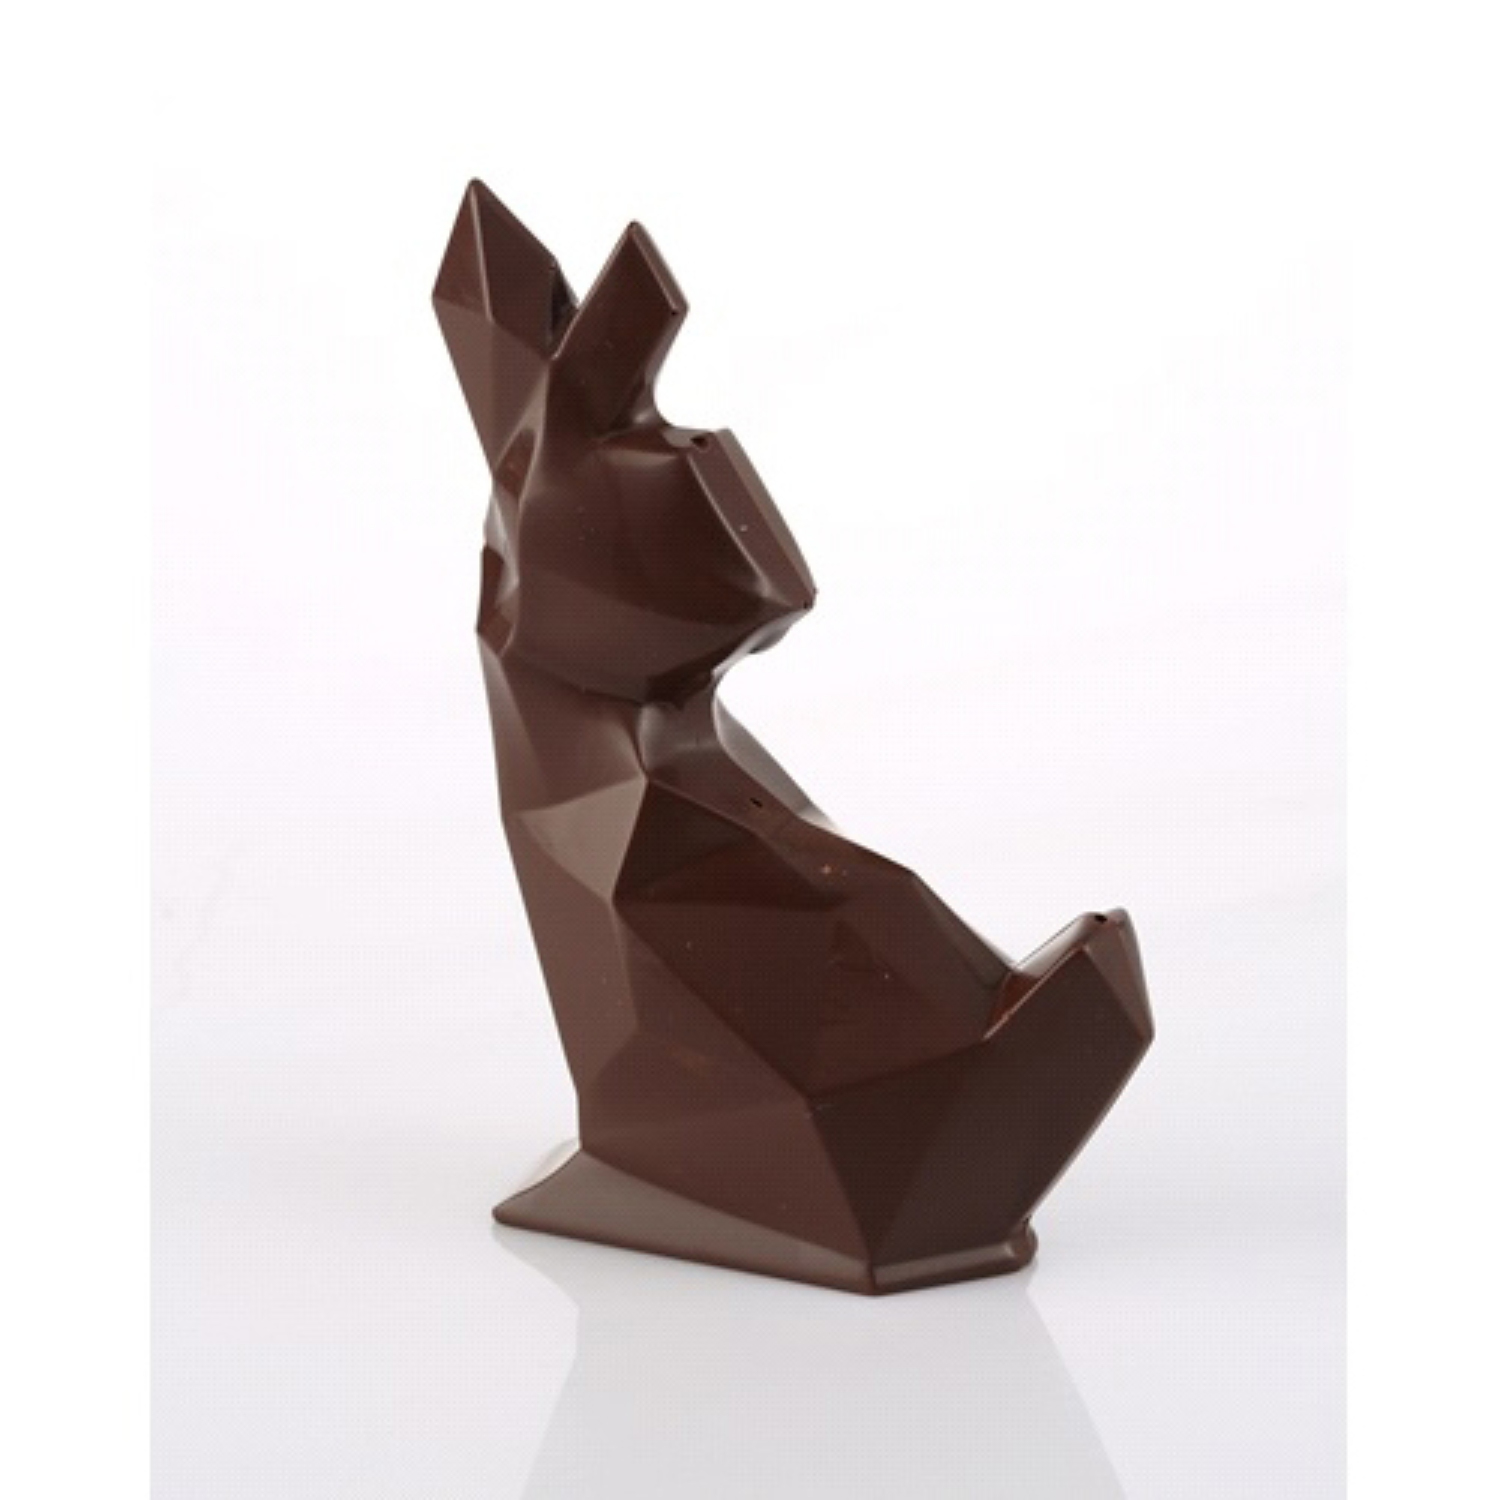 Moule chocolat Barry lapin origami Le Comptoir de la Patisserie